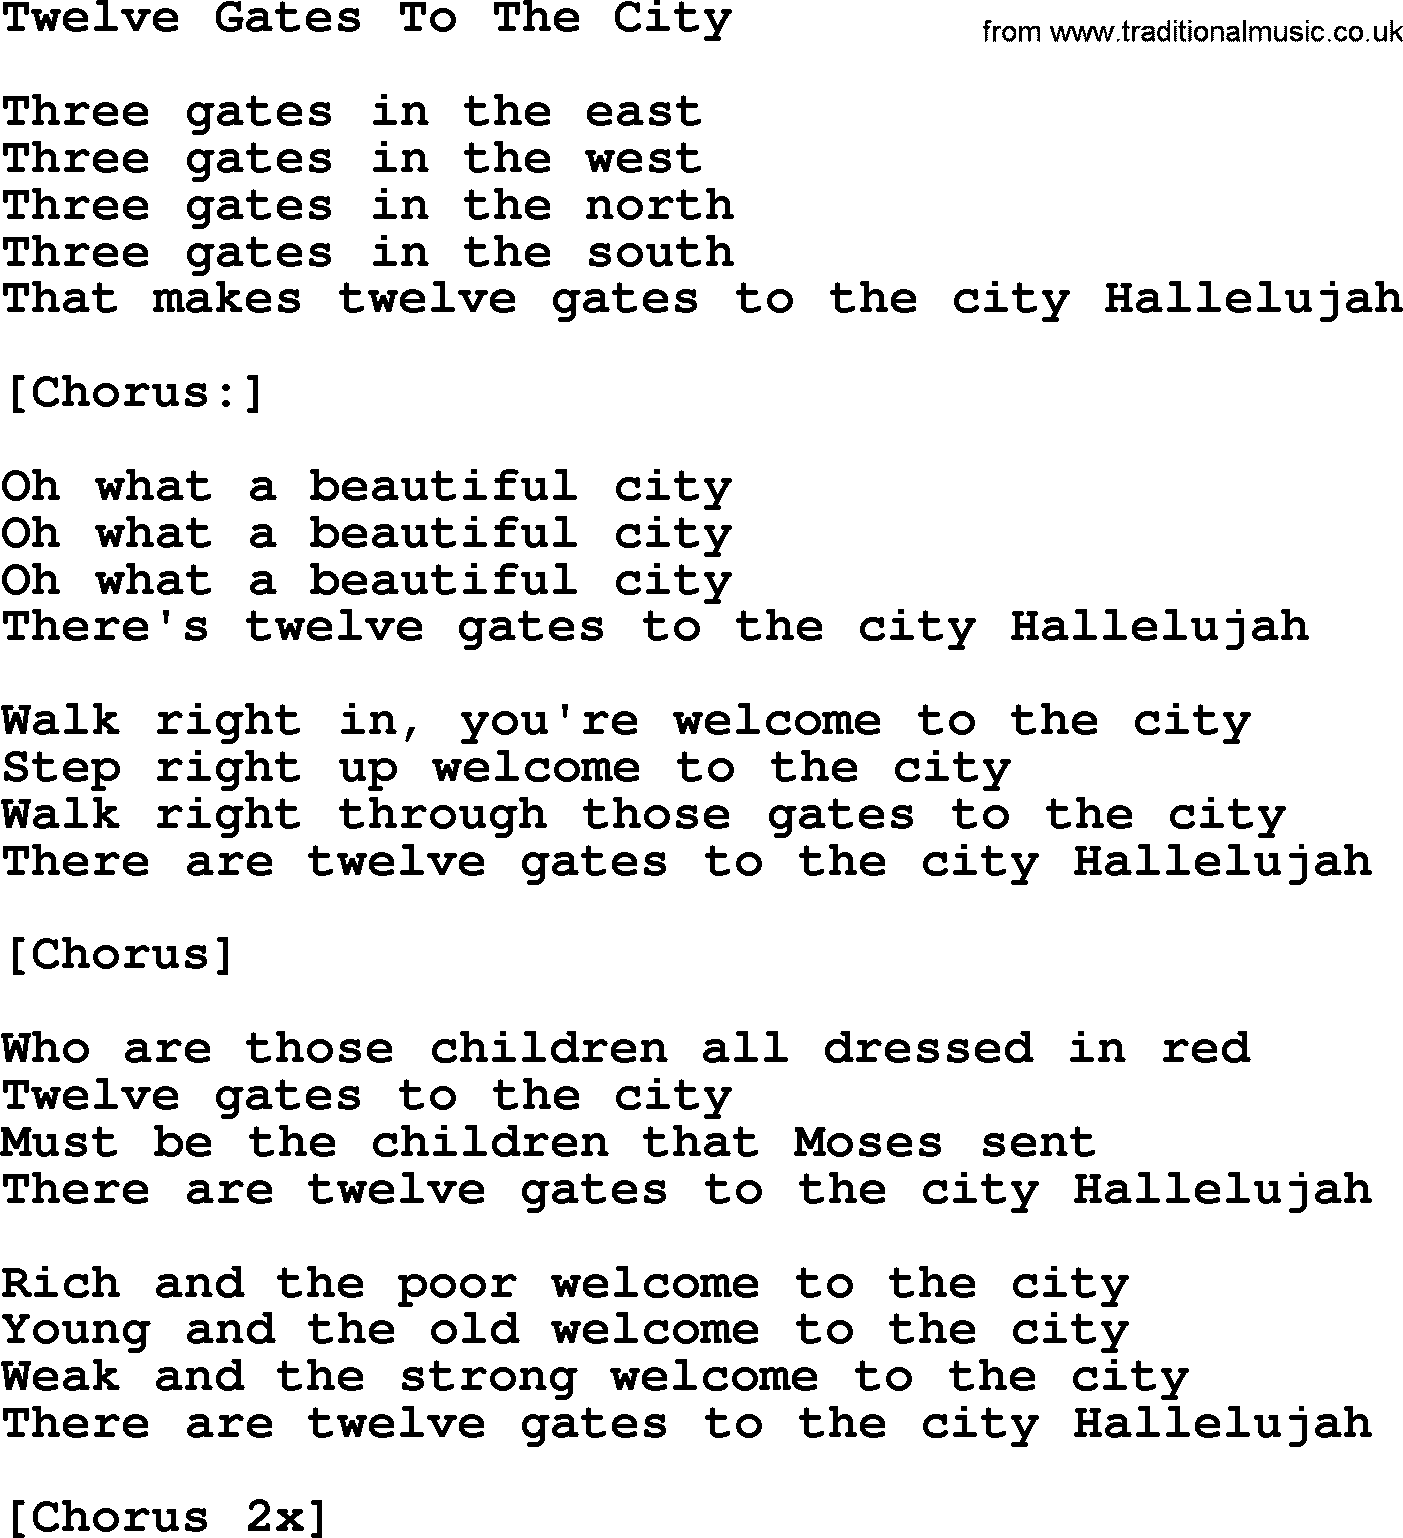 Joan Baez song Twelve Gates To The City, lyrics